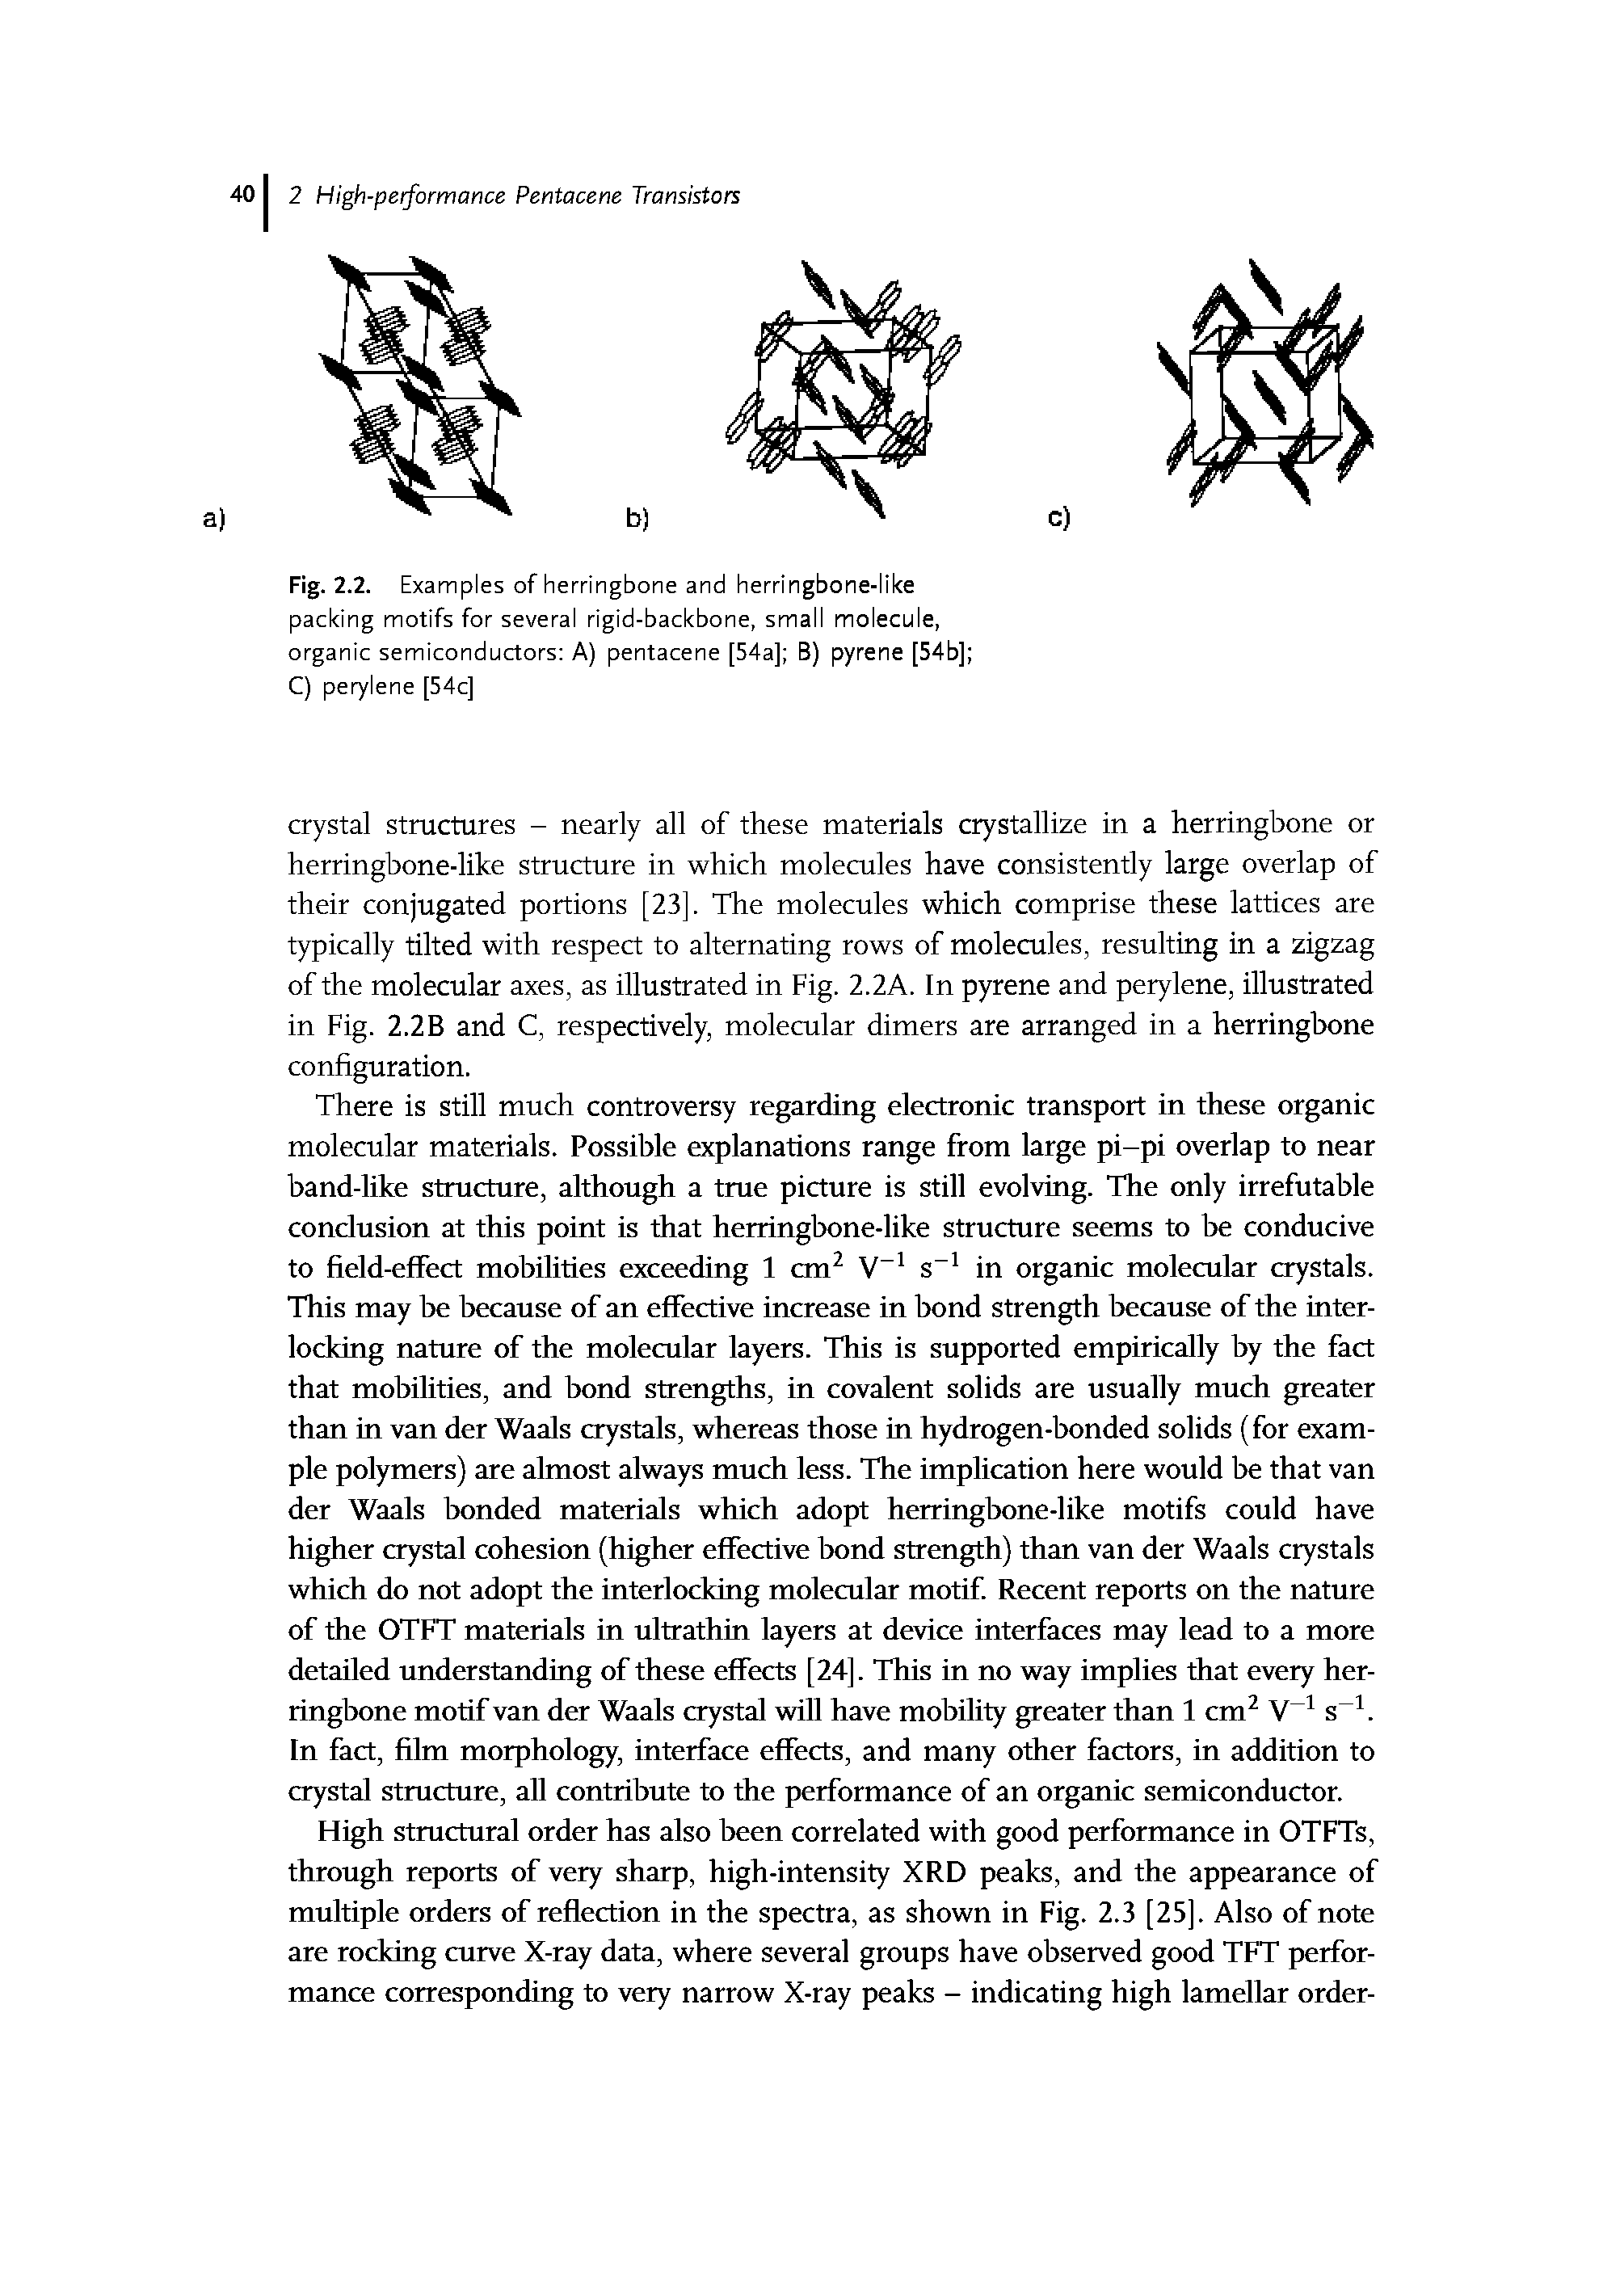 Fig. 2.2. Examples of herringbone and herringbone-like packing motifs for several rigid-backbone, small molecule, organic semiconductors A) pentacene [54a] B) pyrene [54b] C) perylene [54c]...